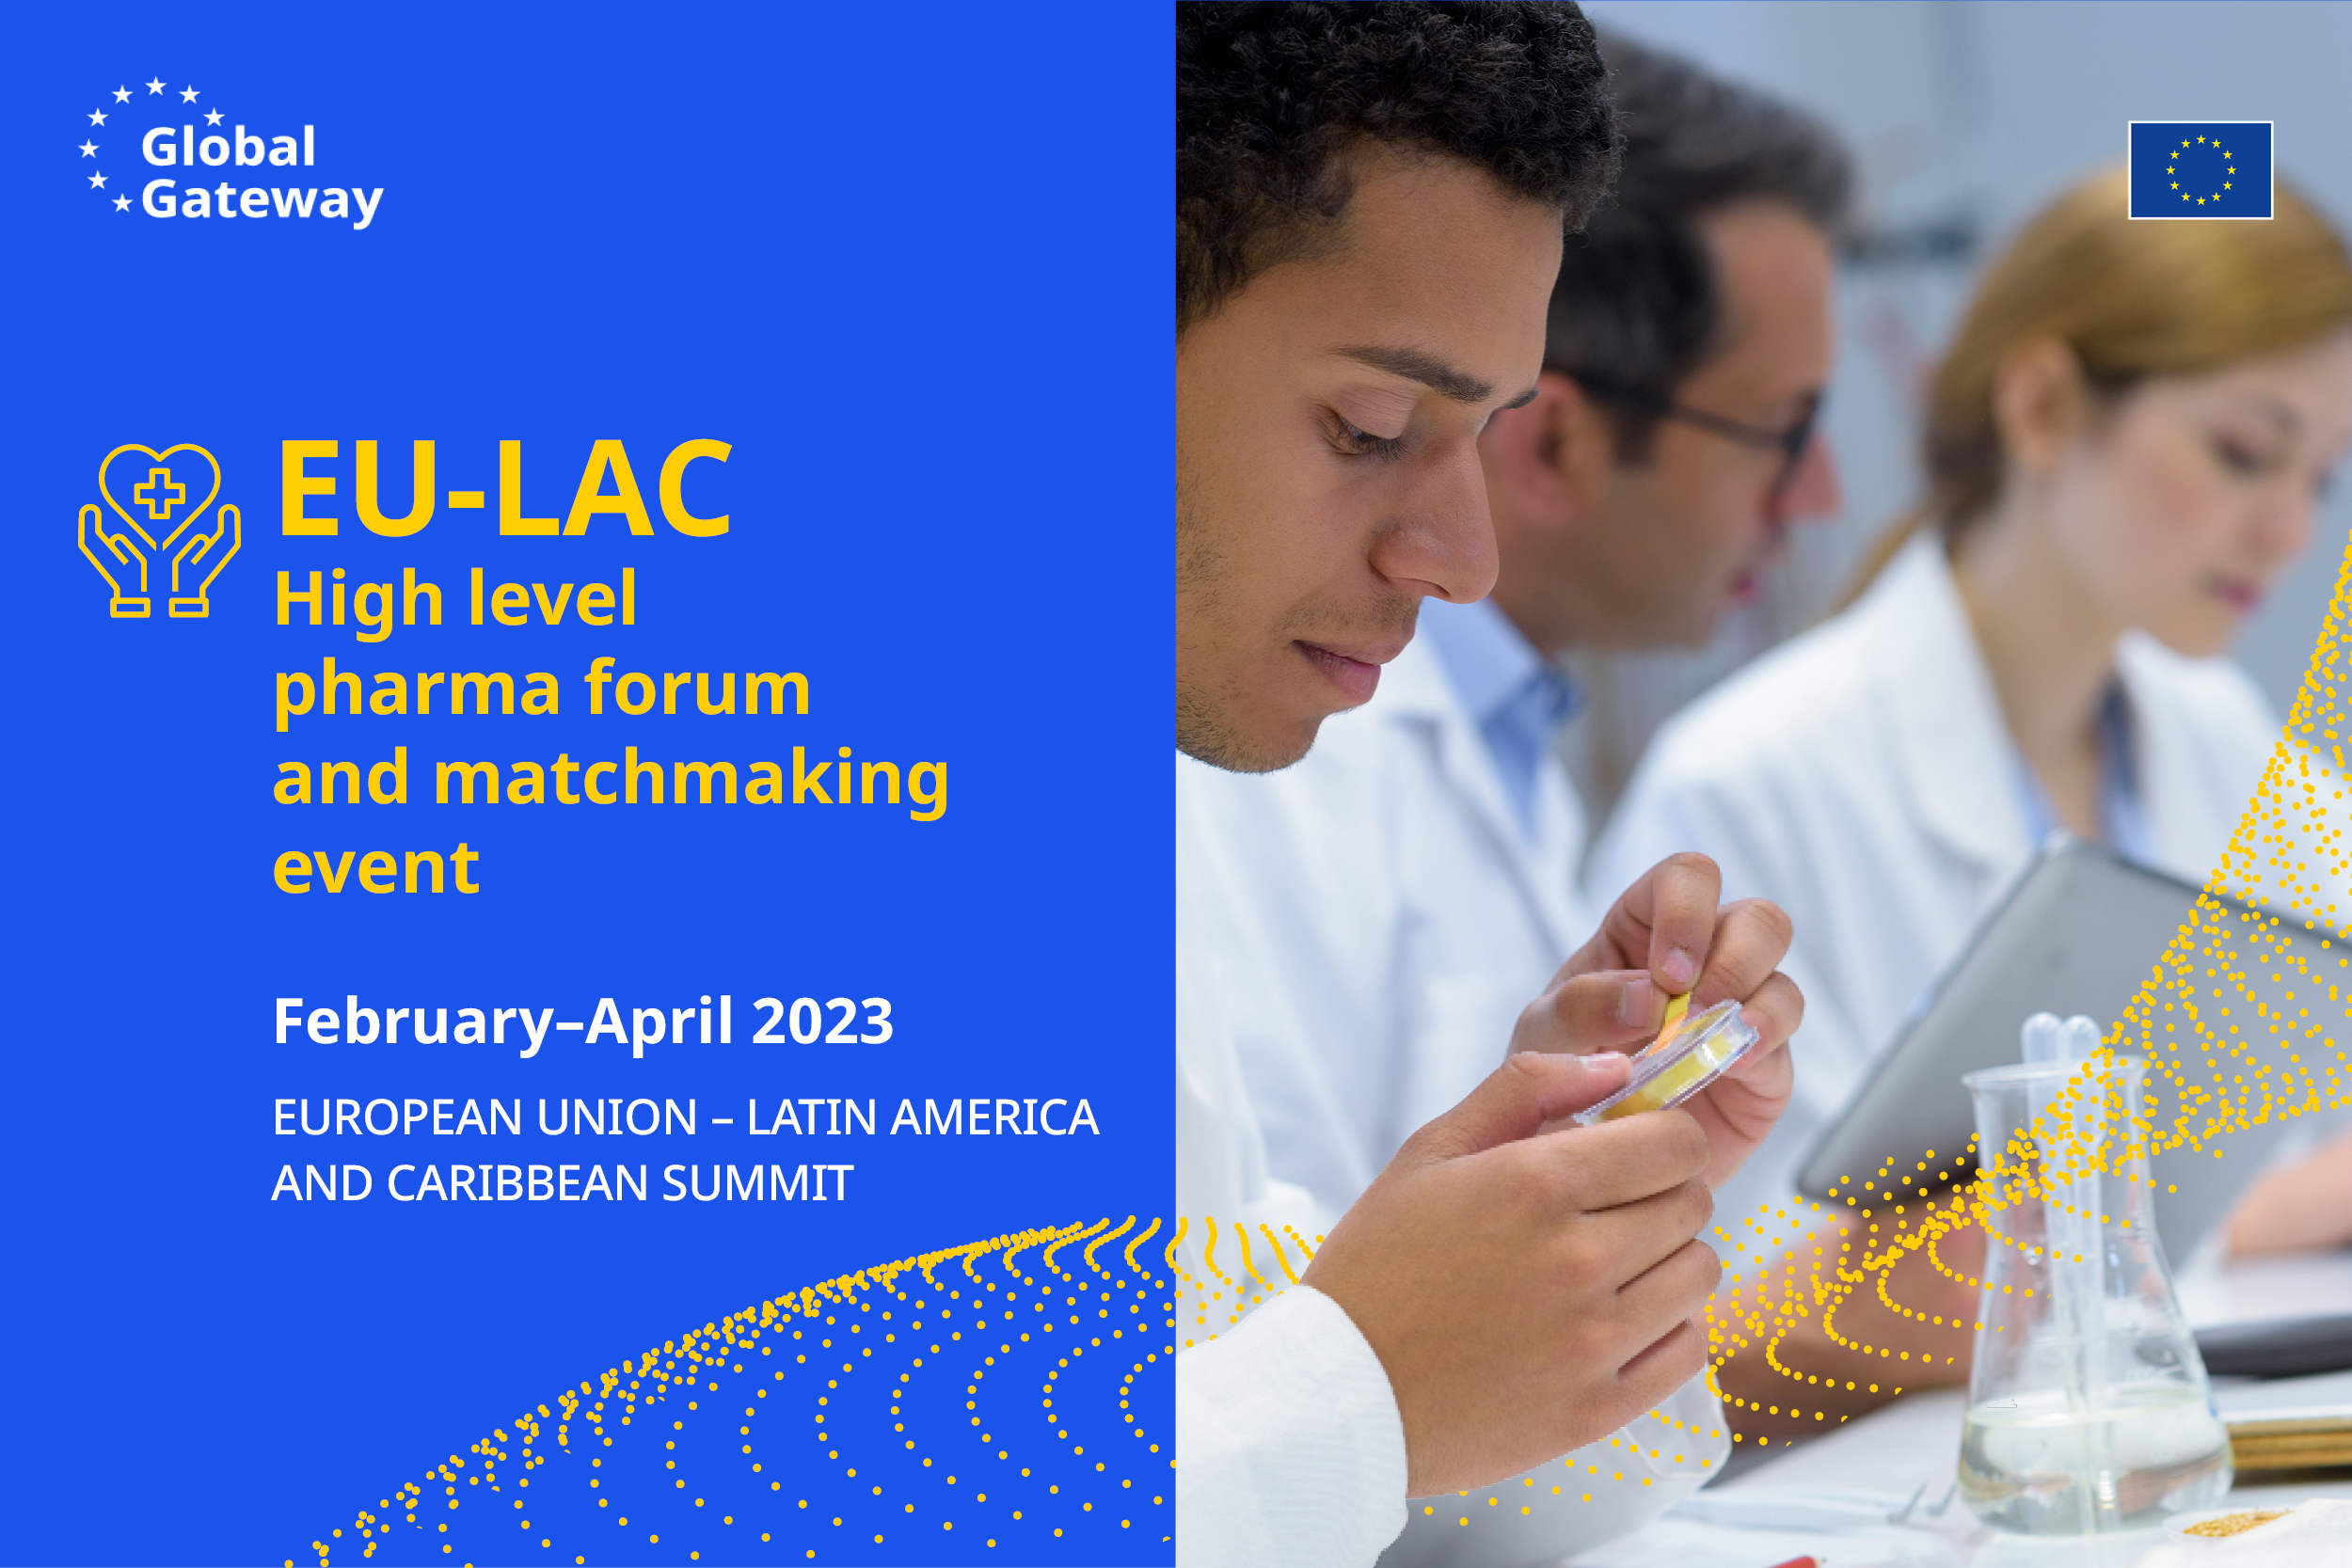 EU-LAC high level pharma forum and matchmaking event